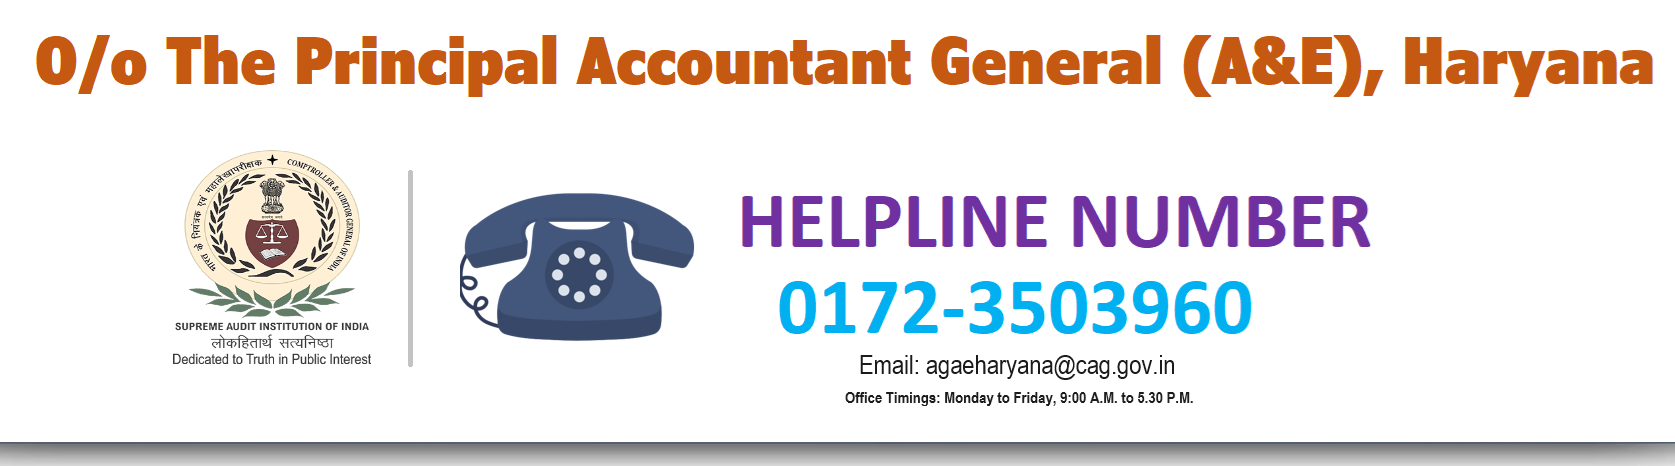 Accountants General (A&E)